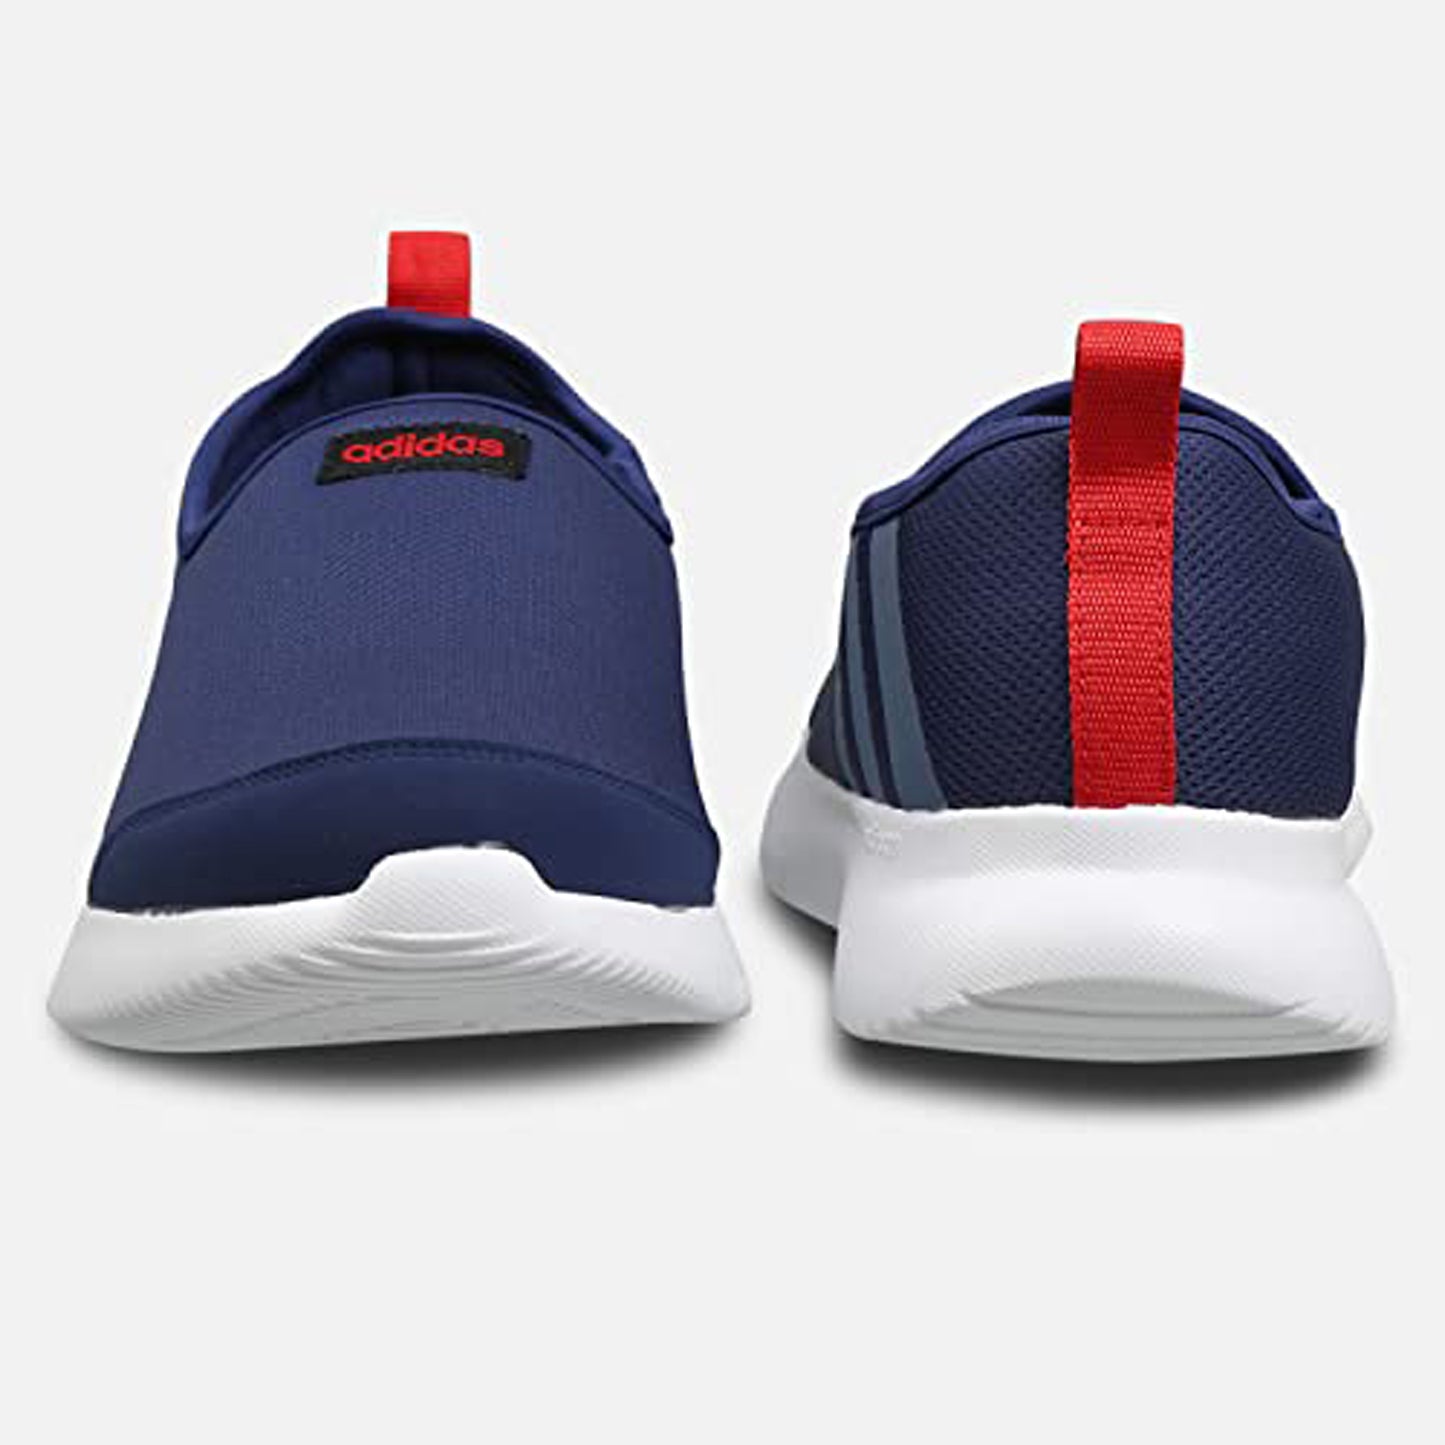 Adidas Men's Alliver Walking Shoe - Best Price online Prokicksports.com